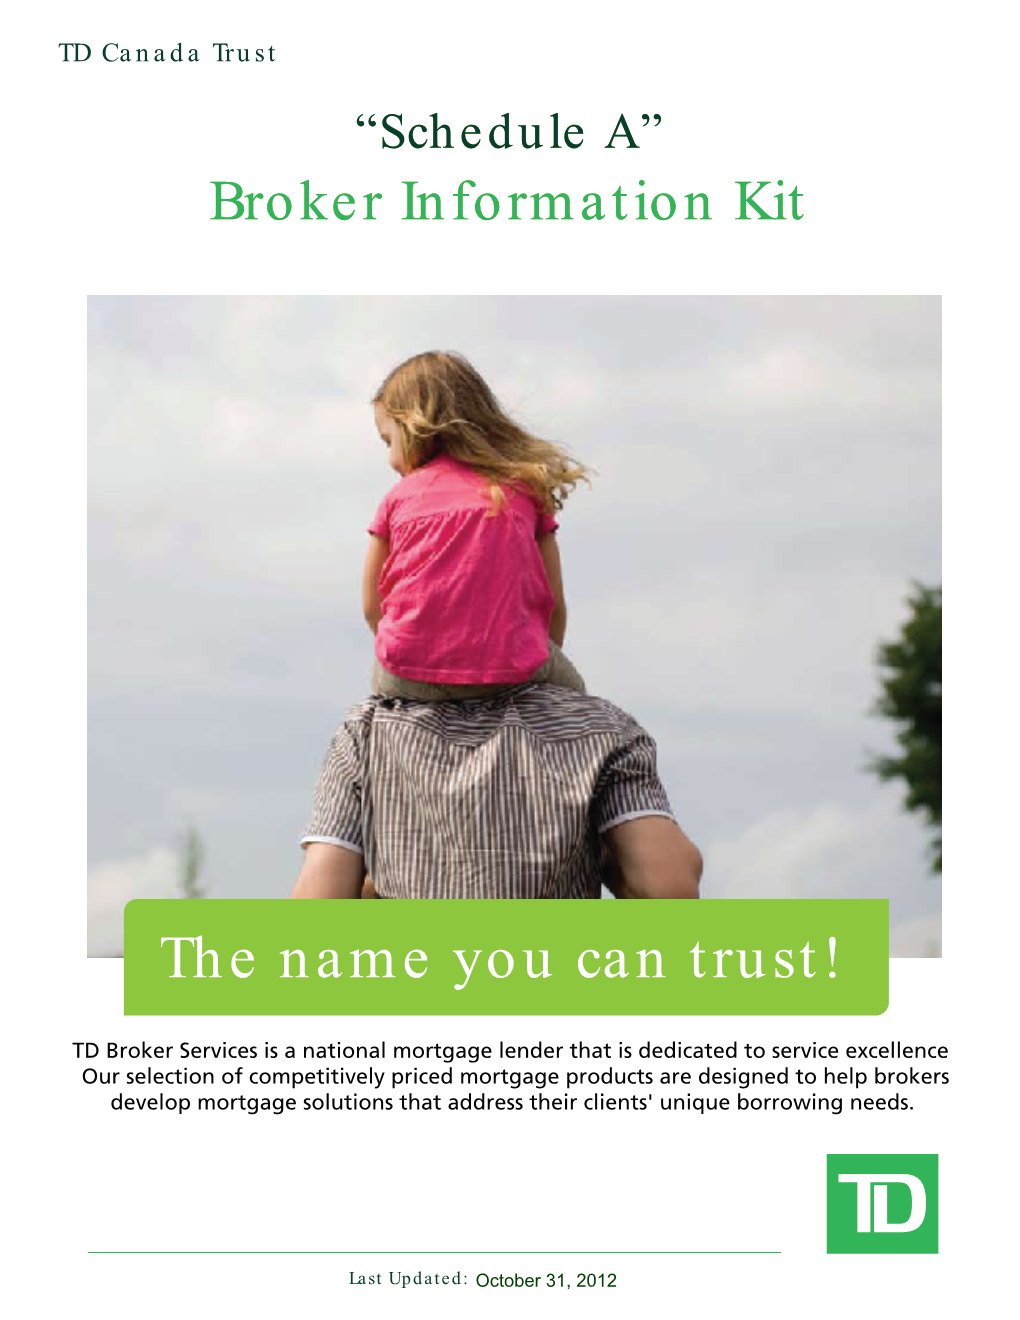 TD Canada Trust “Schedule A” Broker Information Kit